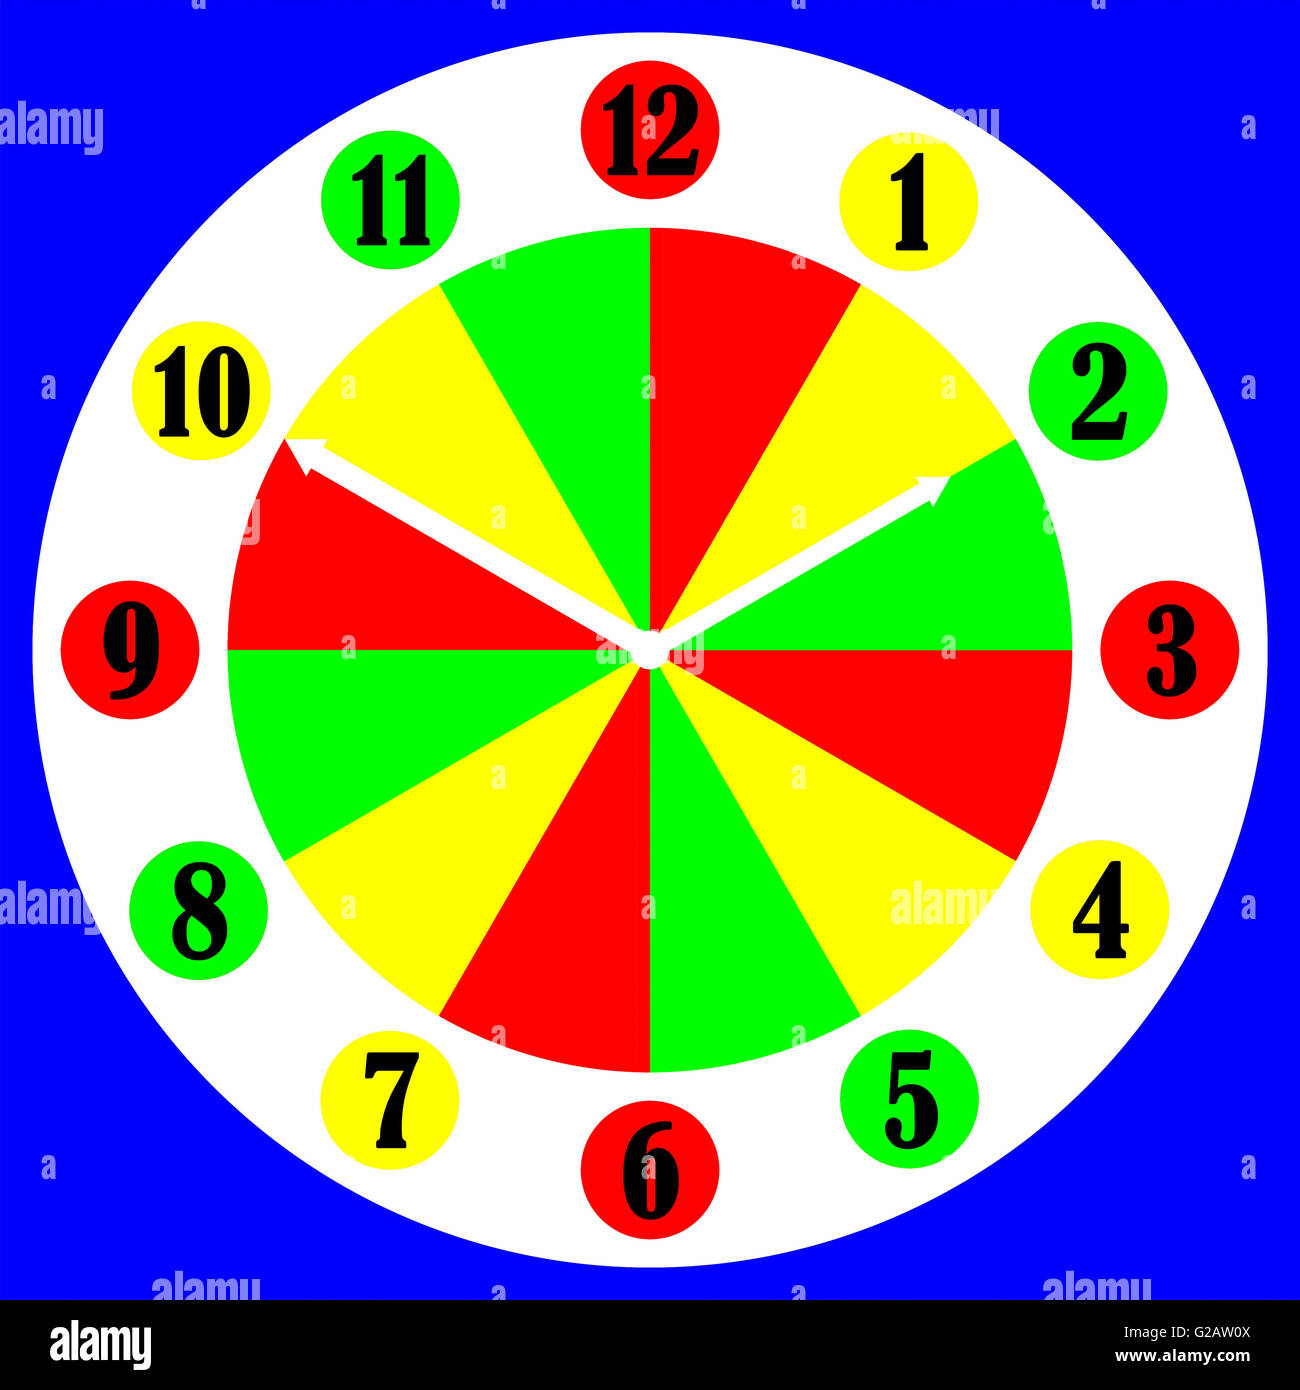 Colourful numerical clock face Stock Photo